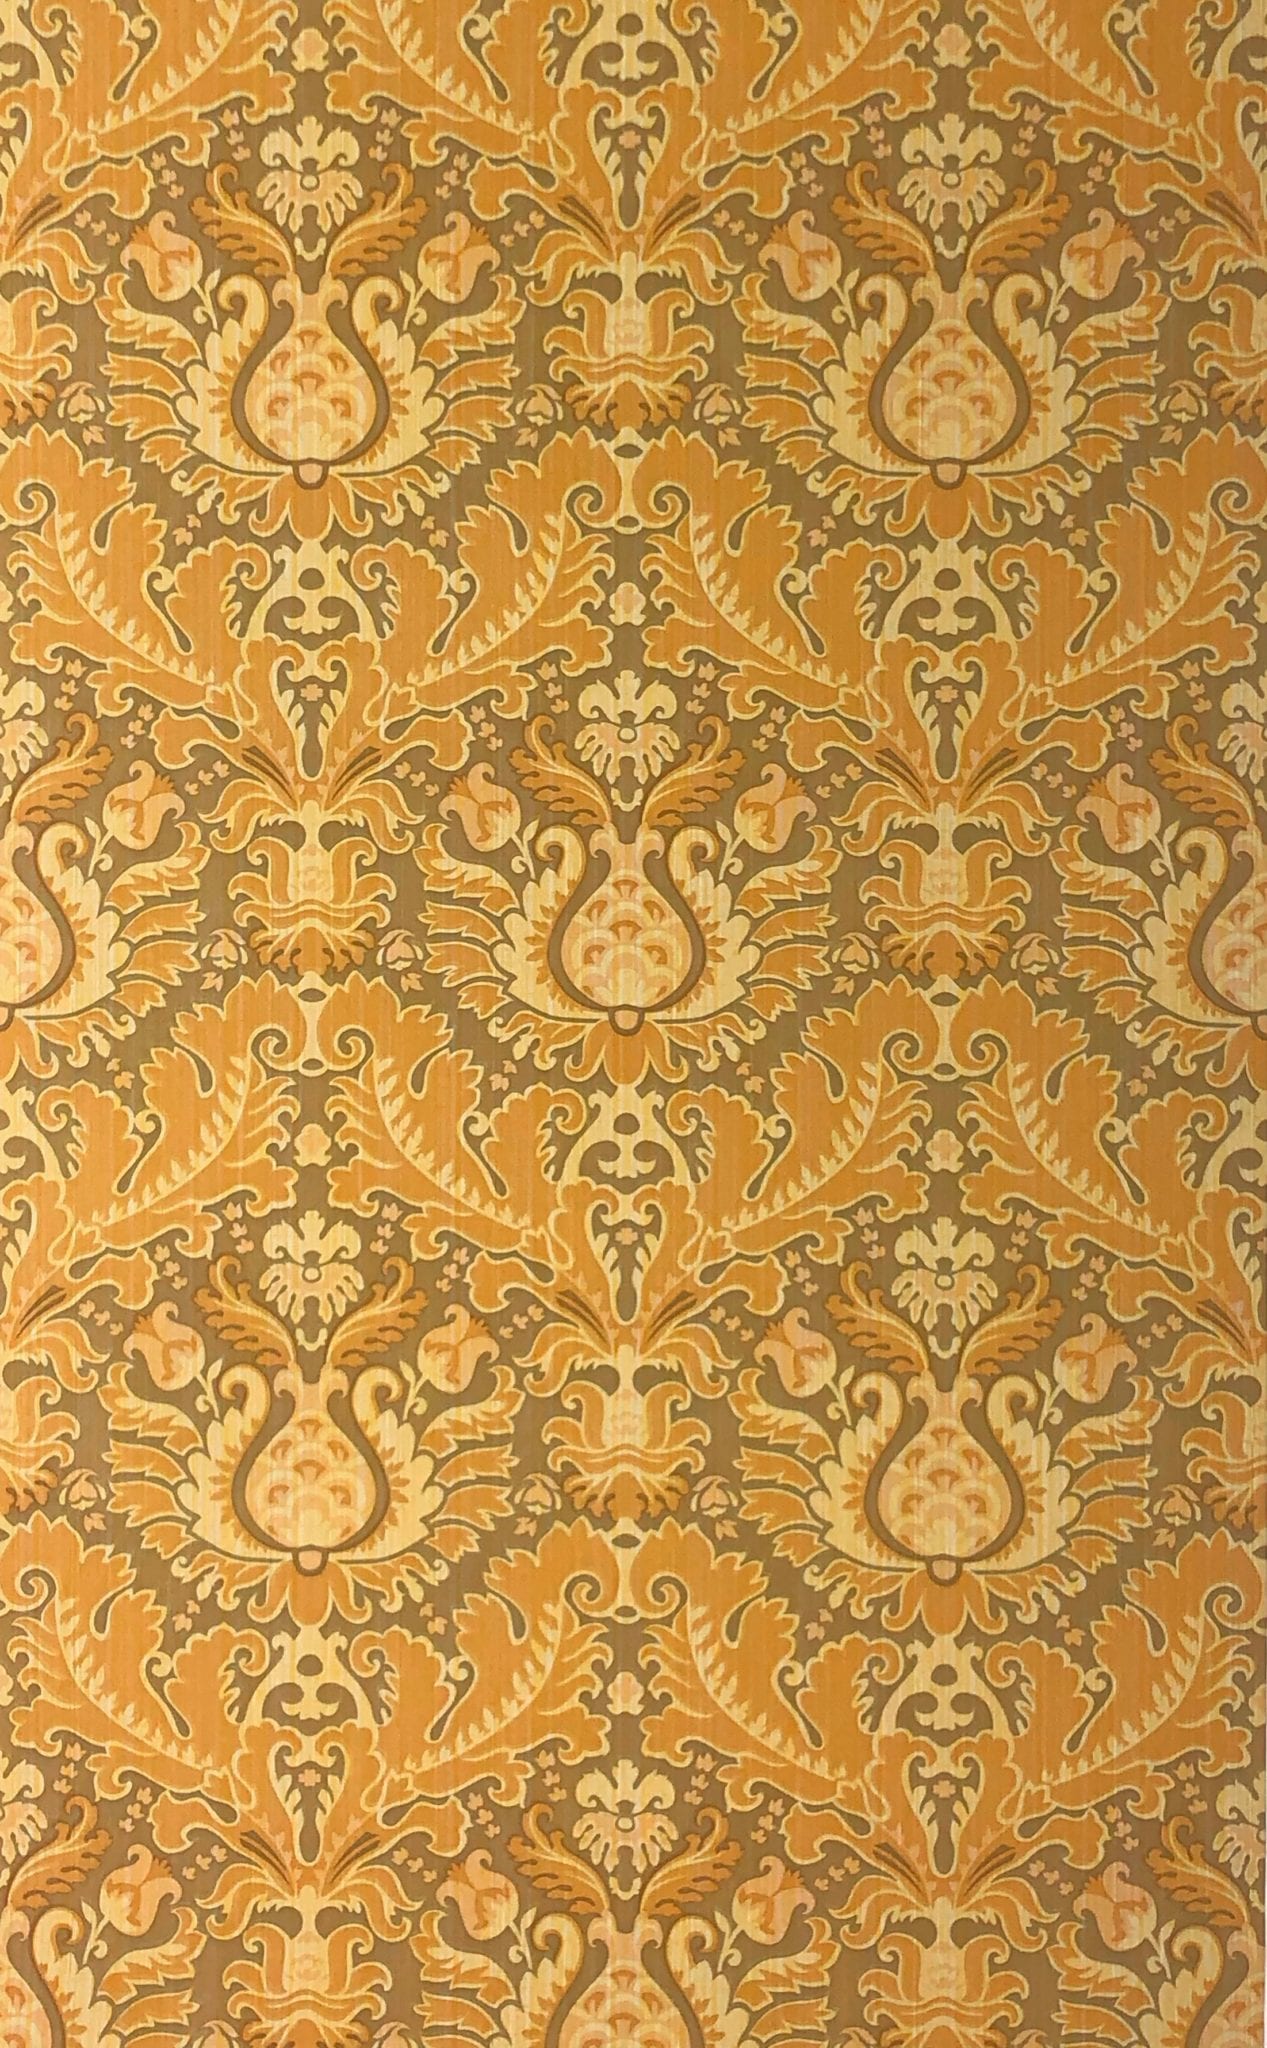 1980s wallpaper,pattern,orange,brown,yellow,visual arts